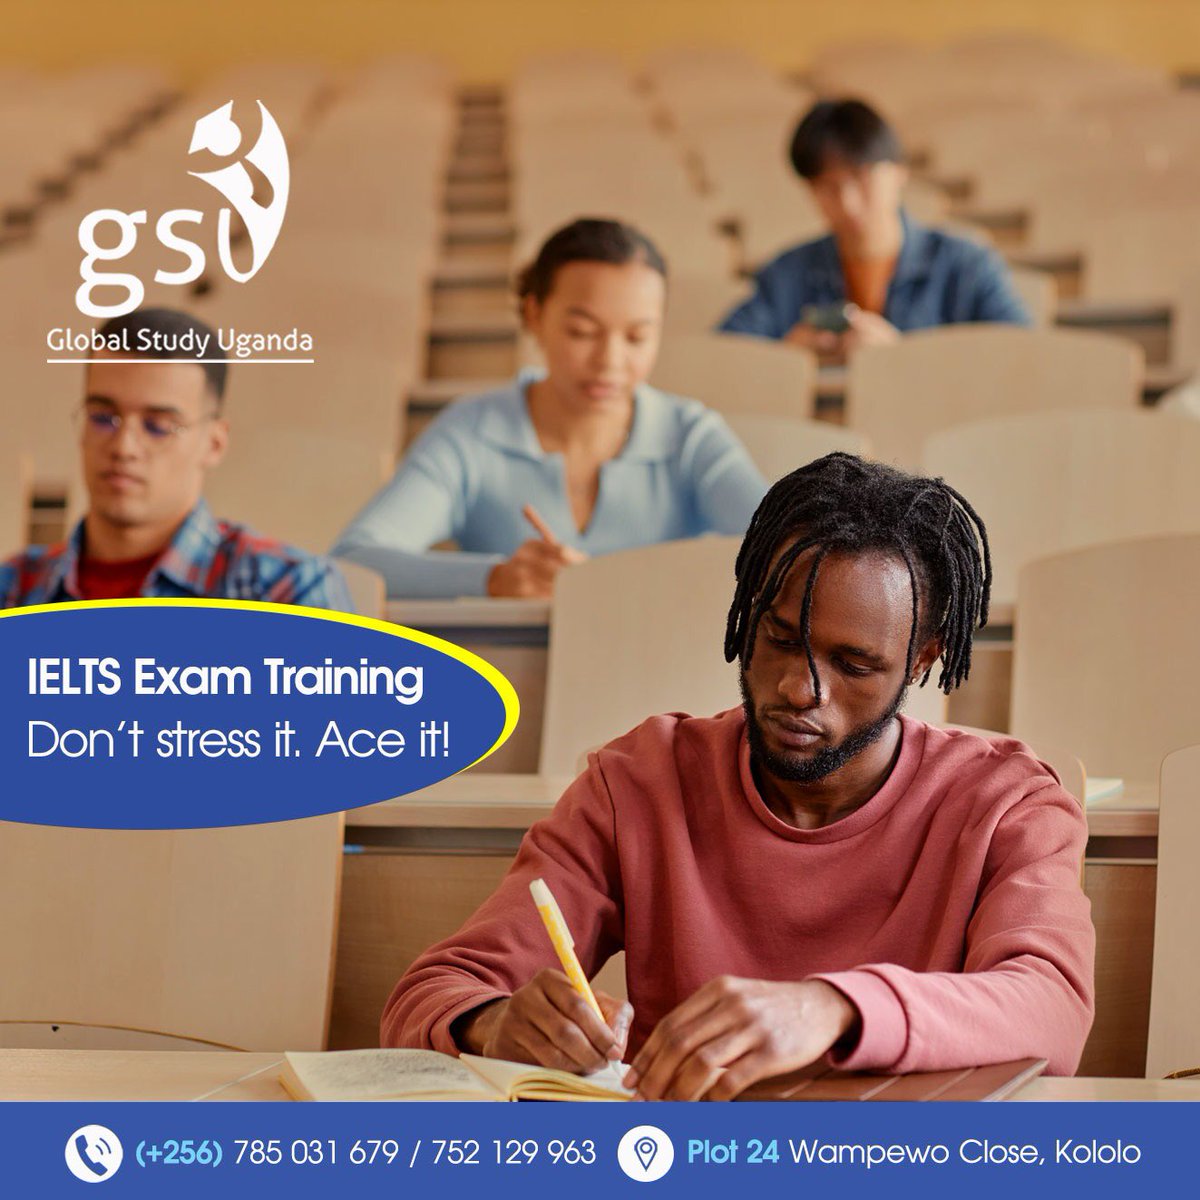 Ace your IELTS Exams thanks to our IELTS Exam Training.

Contact us for free support via globalstudyuganda.com

#GSU #IELTSTraining #EnglishExams #MondayMotivation